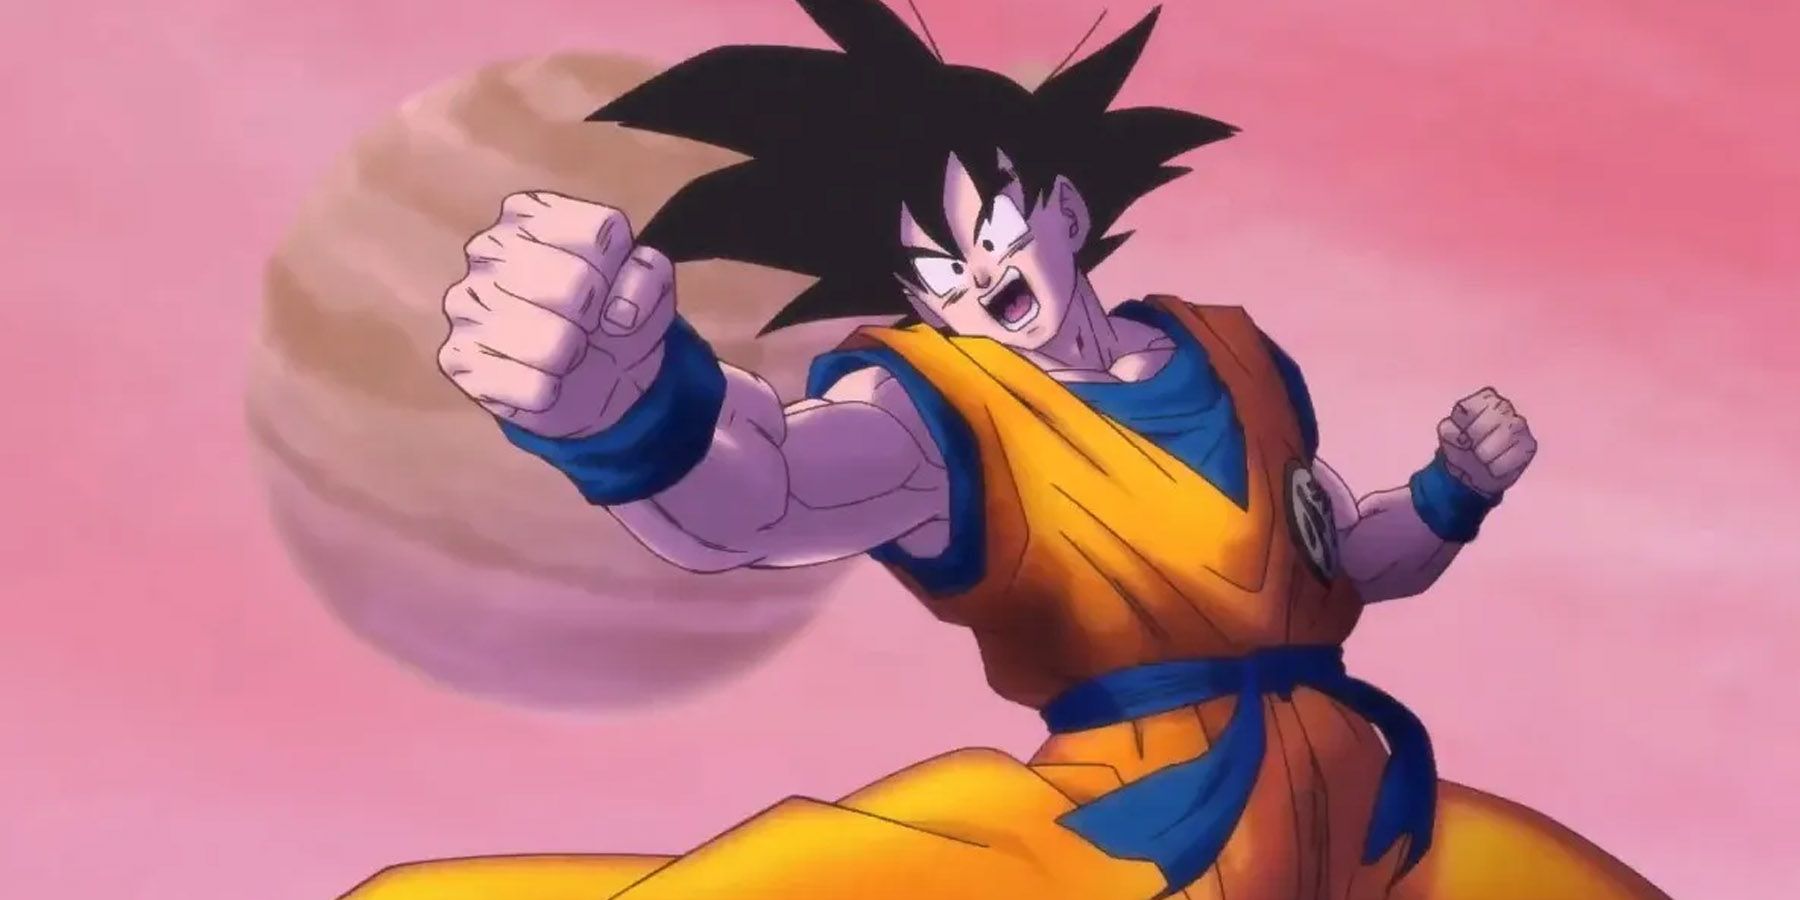 Goku tel qu'il apparaît dans Dragon Ball